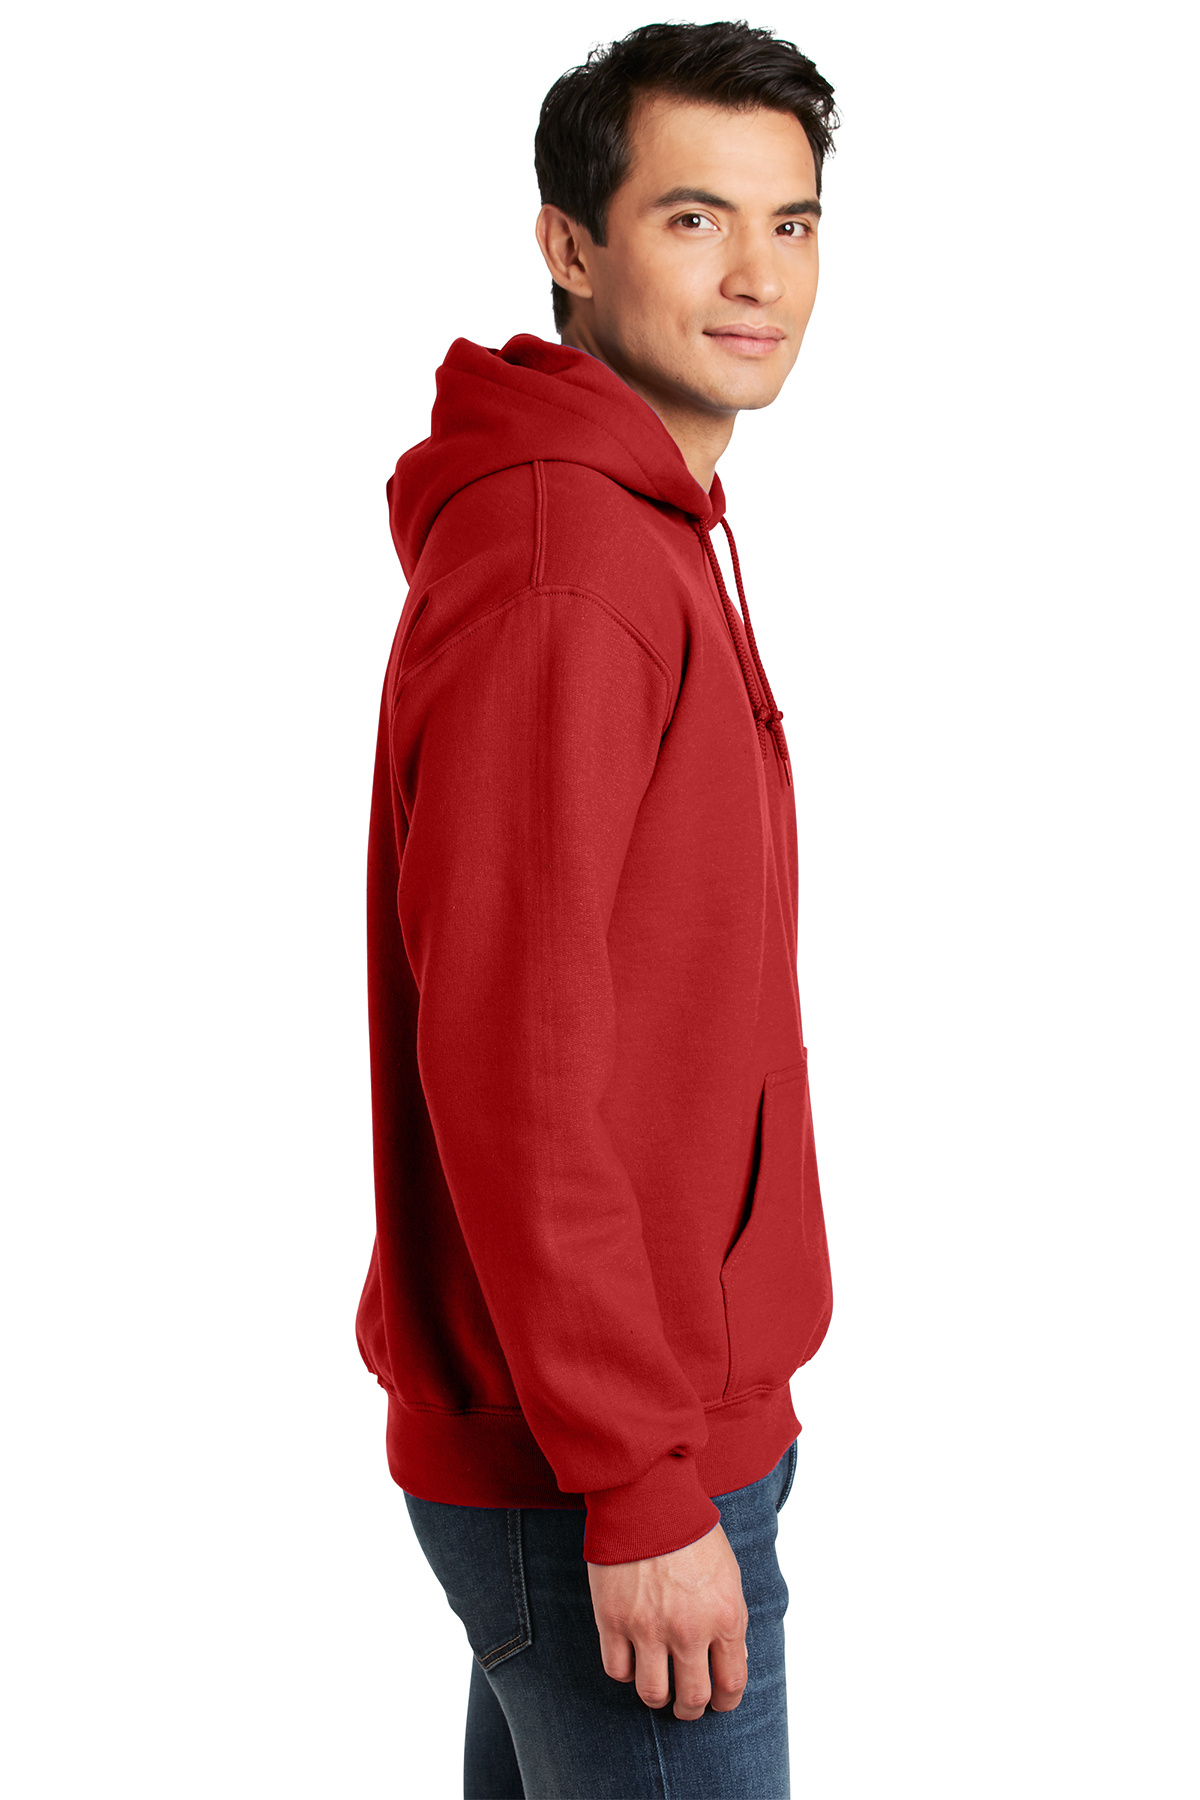 Gildan - DryBlend Pullover SanMar Hooded | | Sweatshirt Product